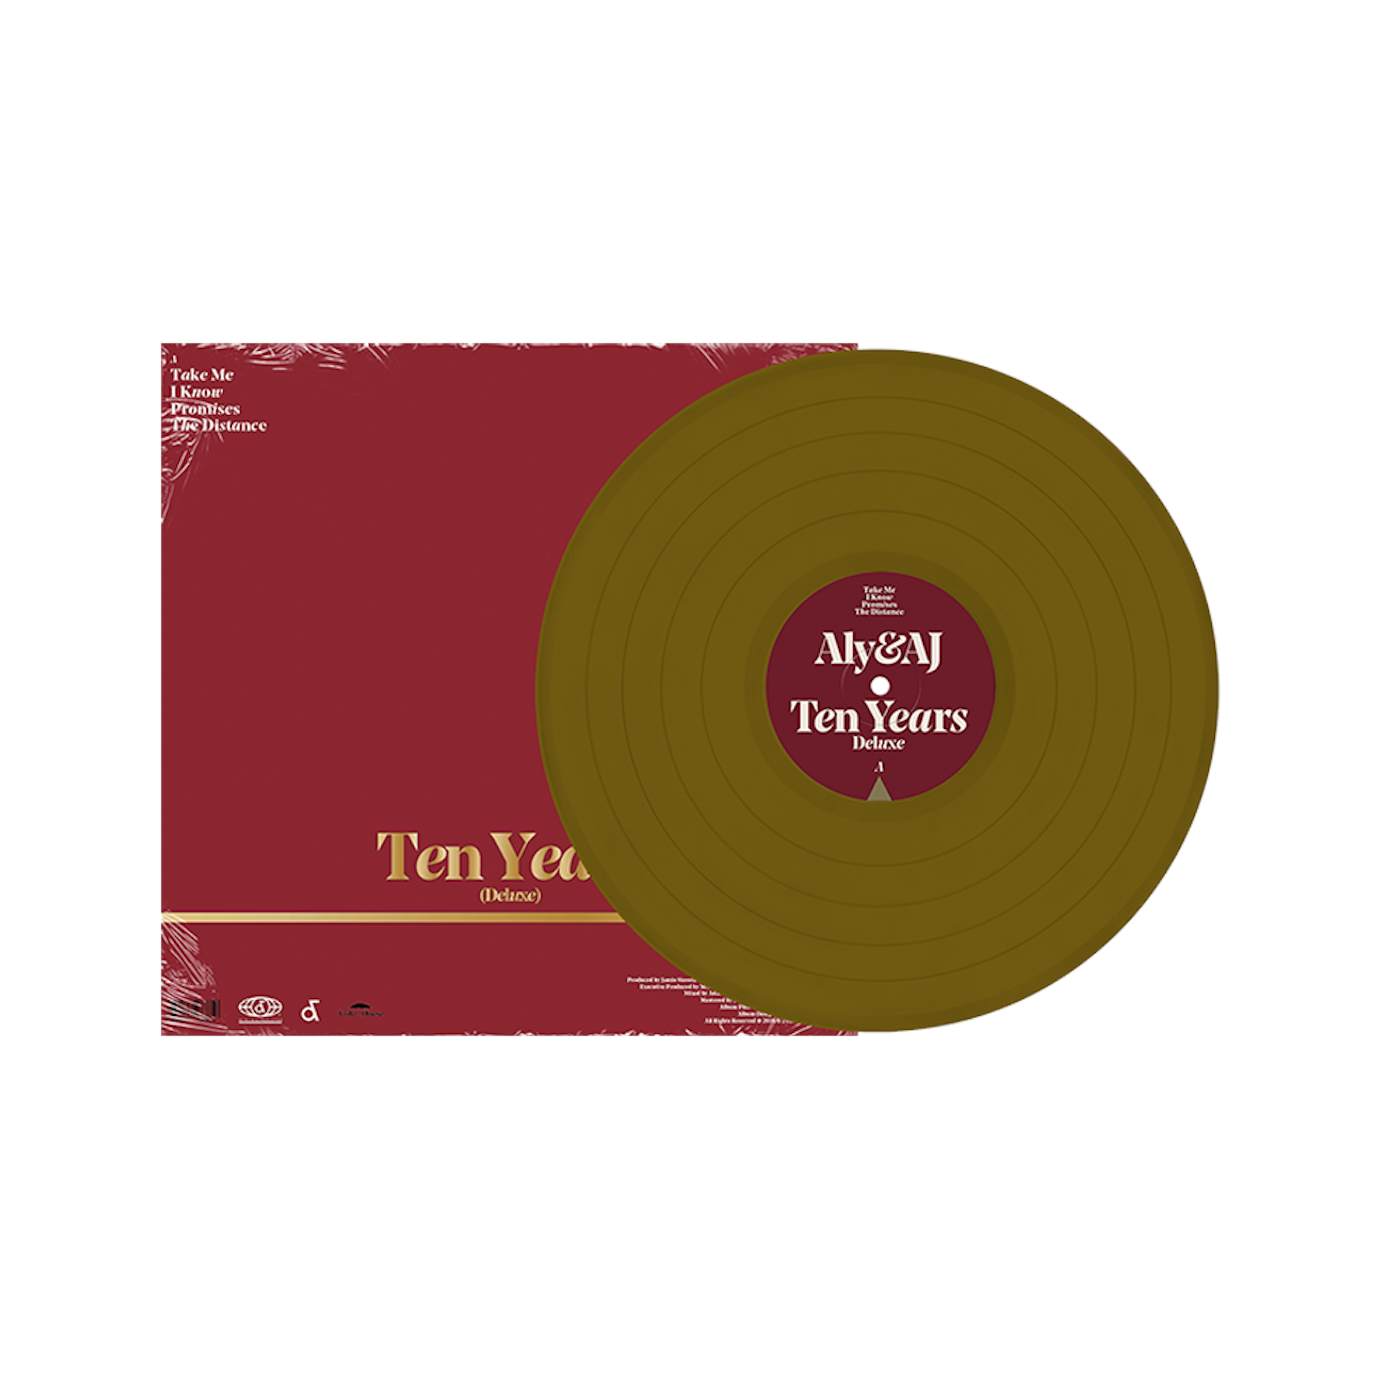 Aly & AJ Ten Years Deluxe Vinyl